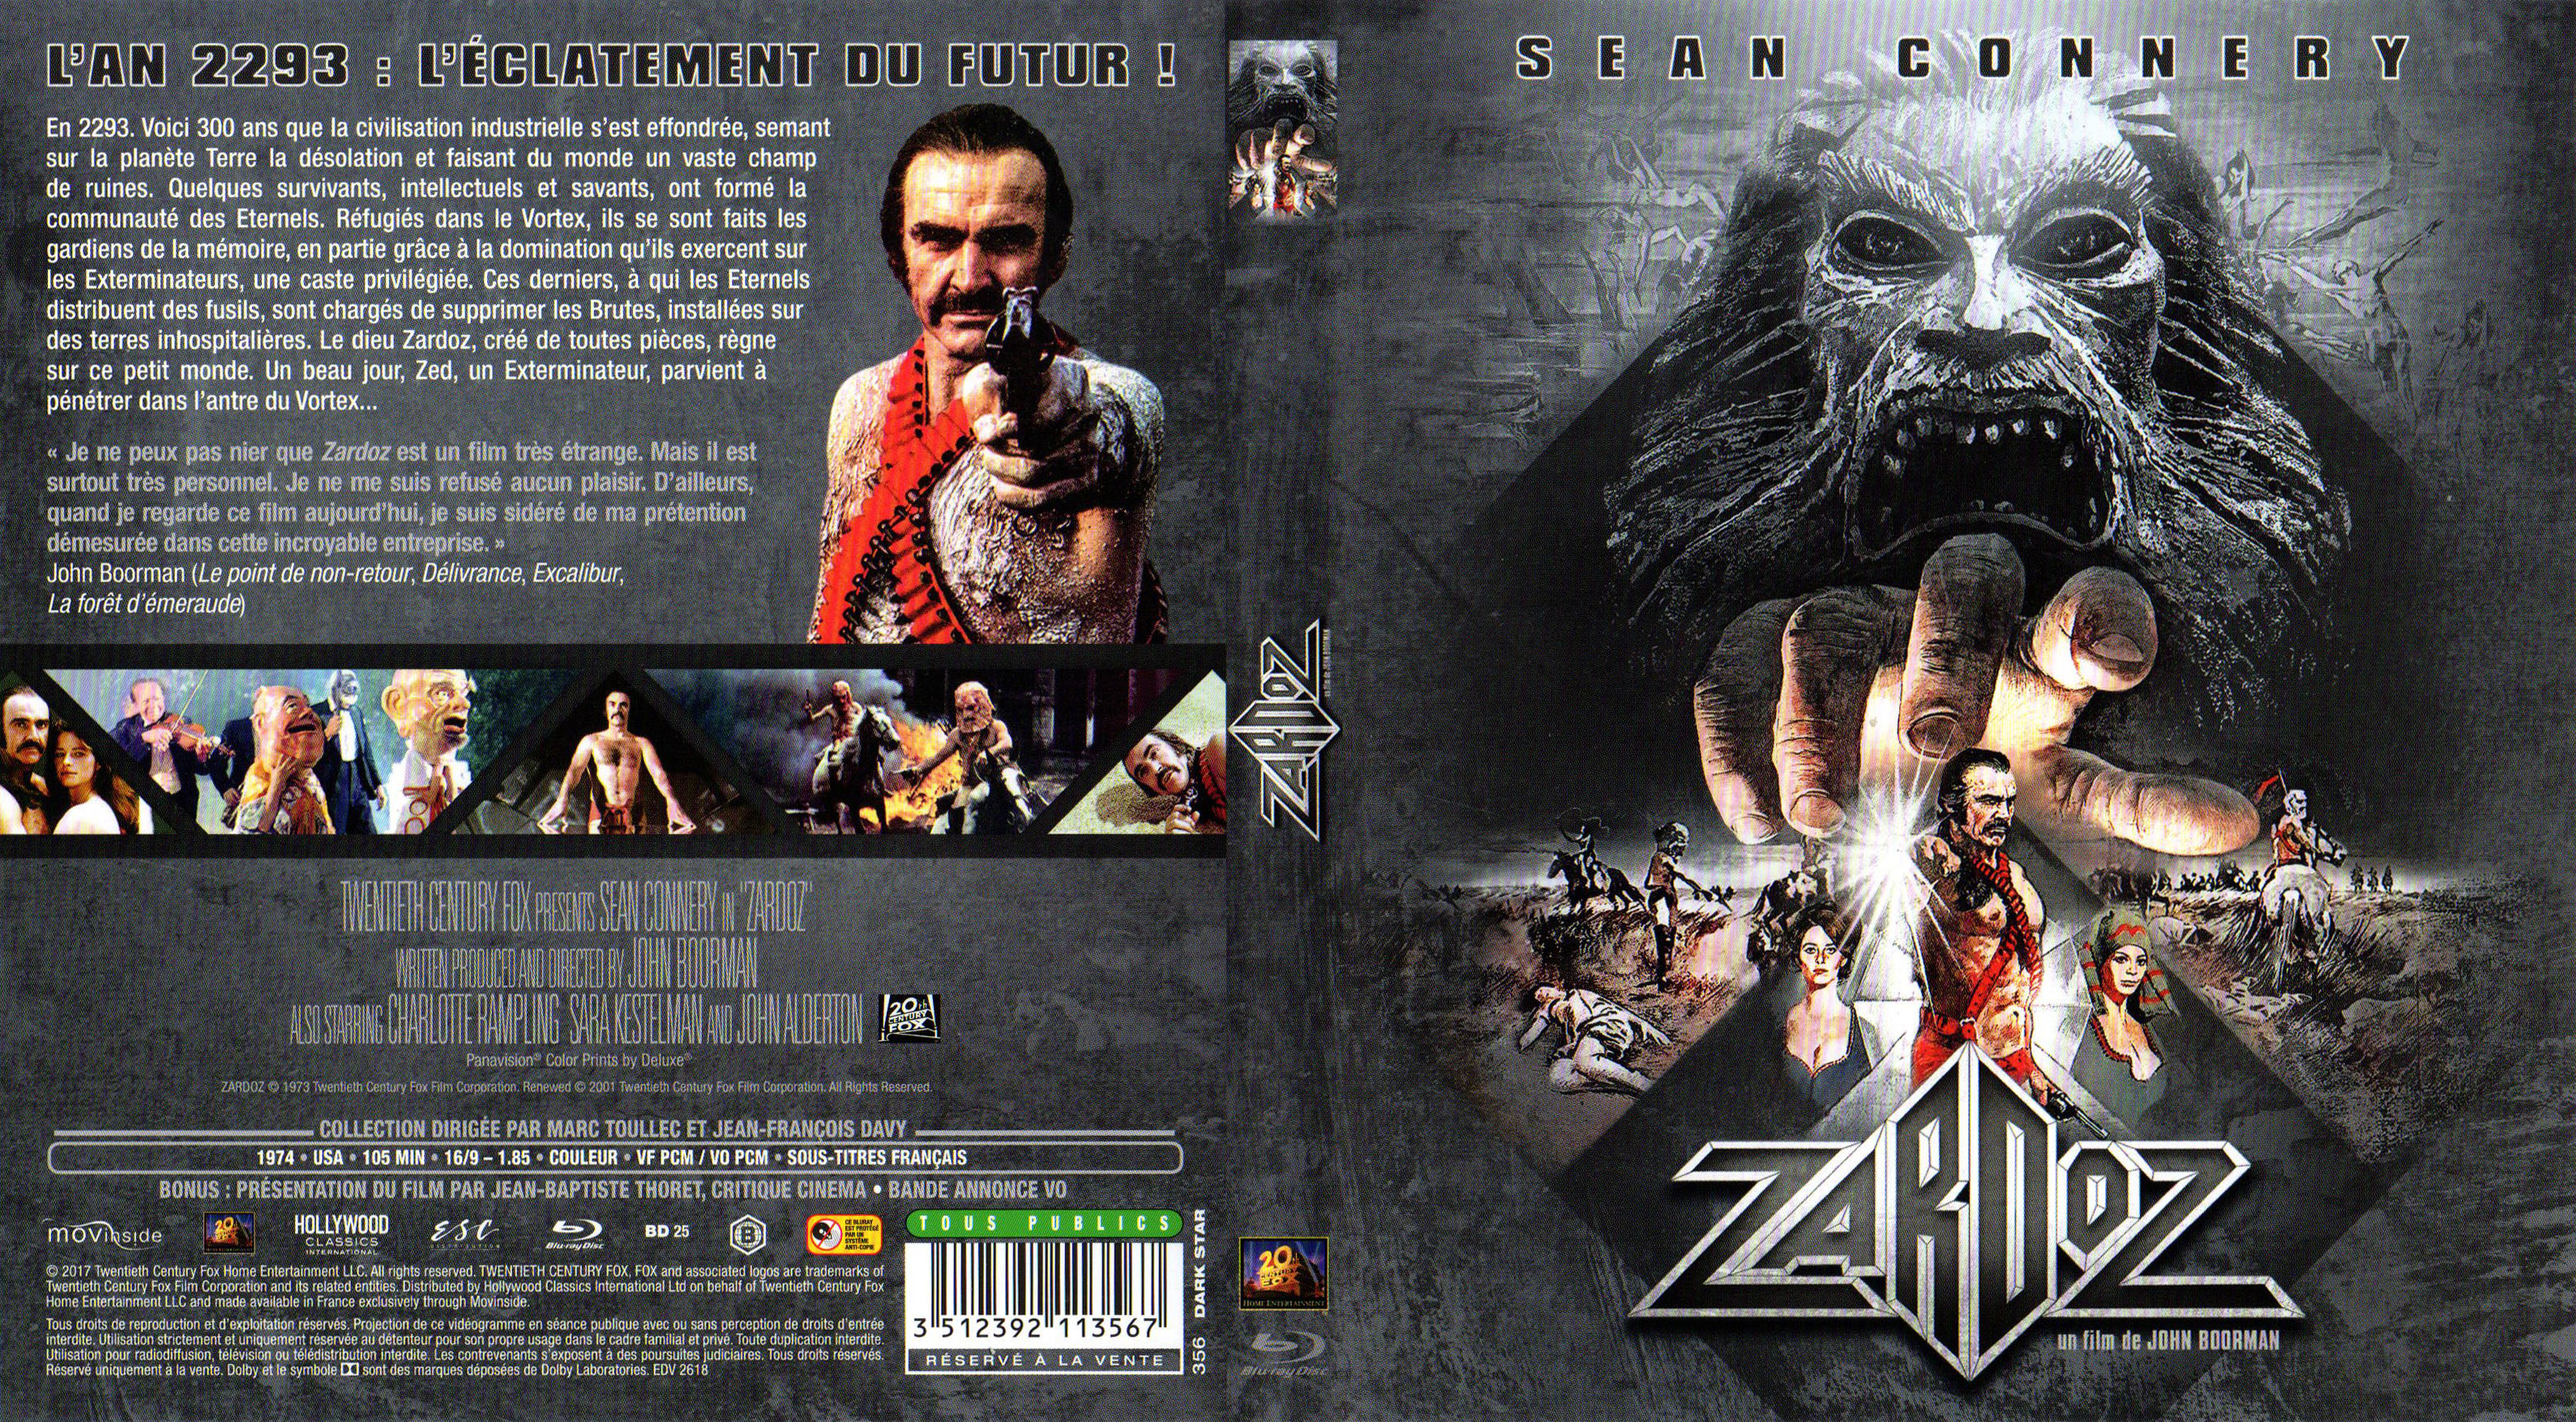 Jaquette DVD Zardoz (BLU-RAY)